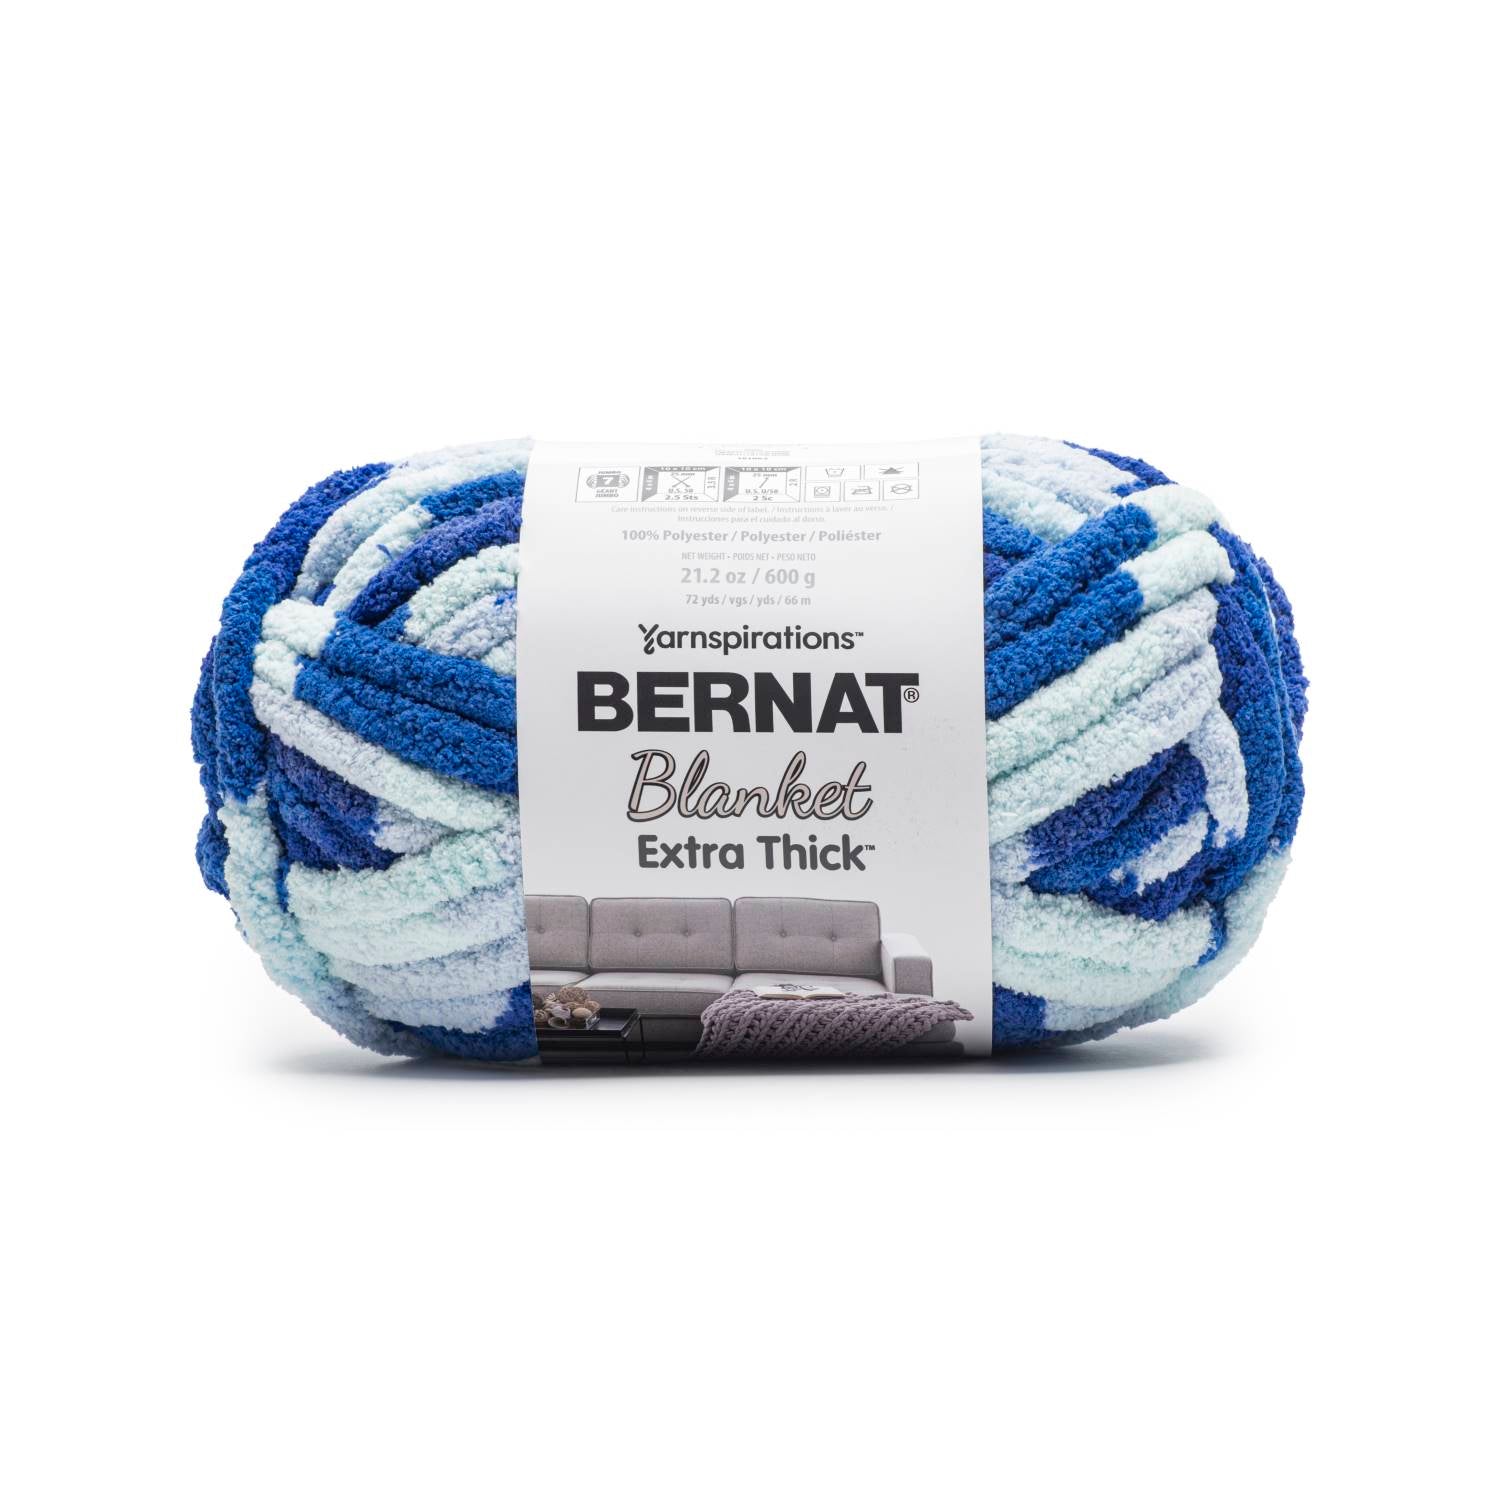 Bernat Blanket Extra Thick Yarn (600g/21.2oz) - Discontinued Shades Blue Mist